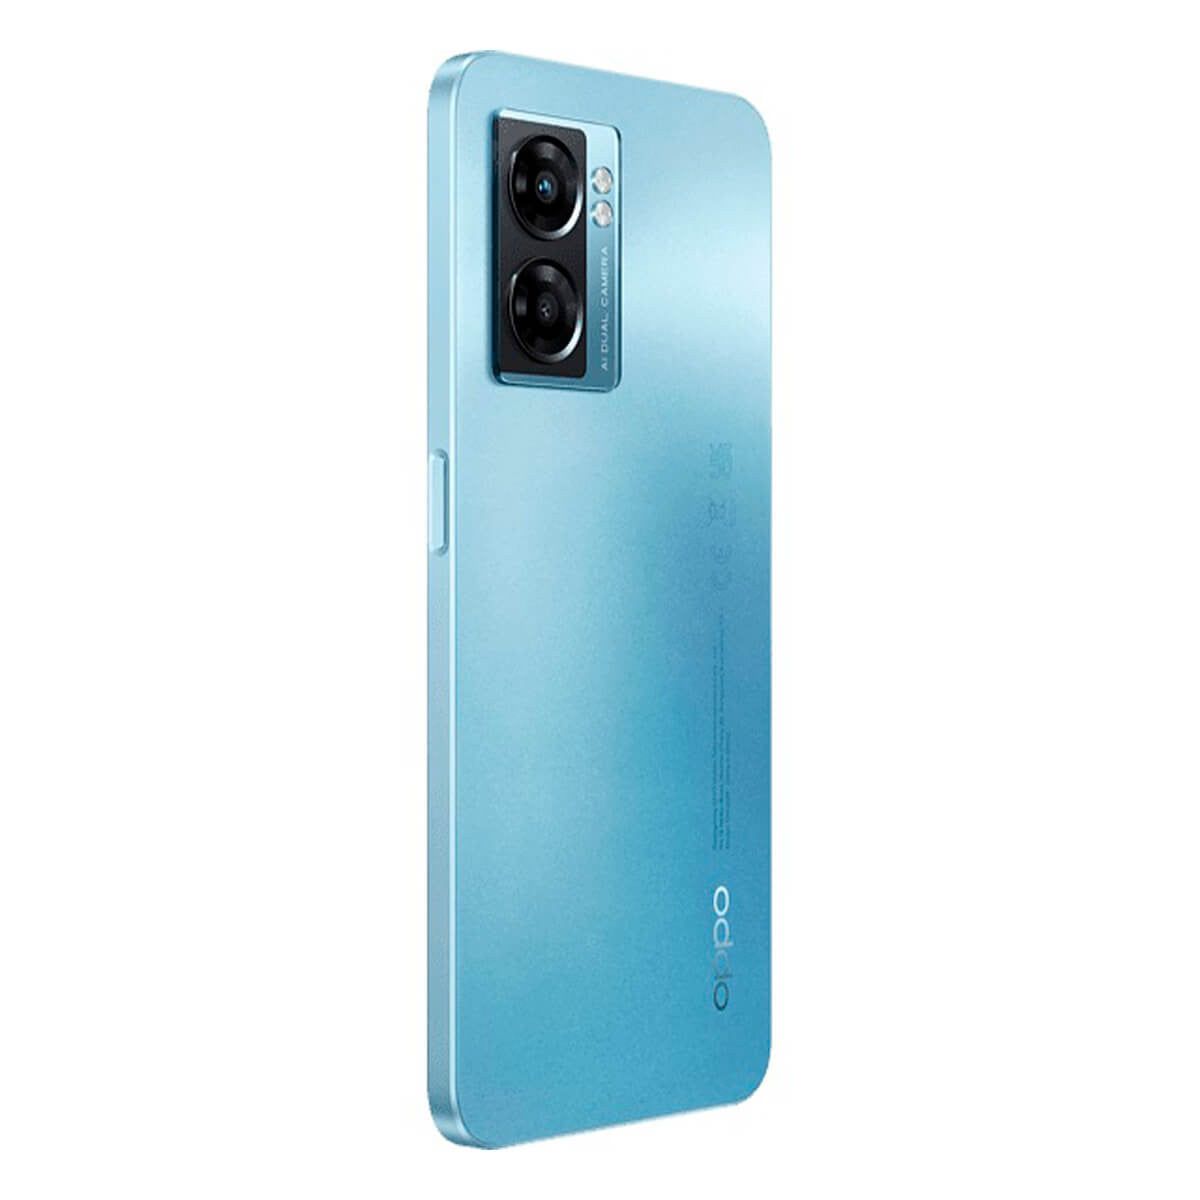 Oppo A77 5G 4GB/64GB Azul (Ocean Blue) Dual SIM Smartphone | Oppo